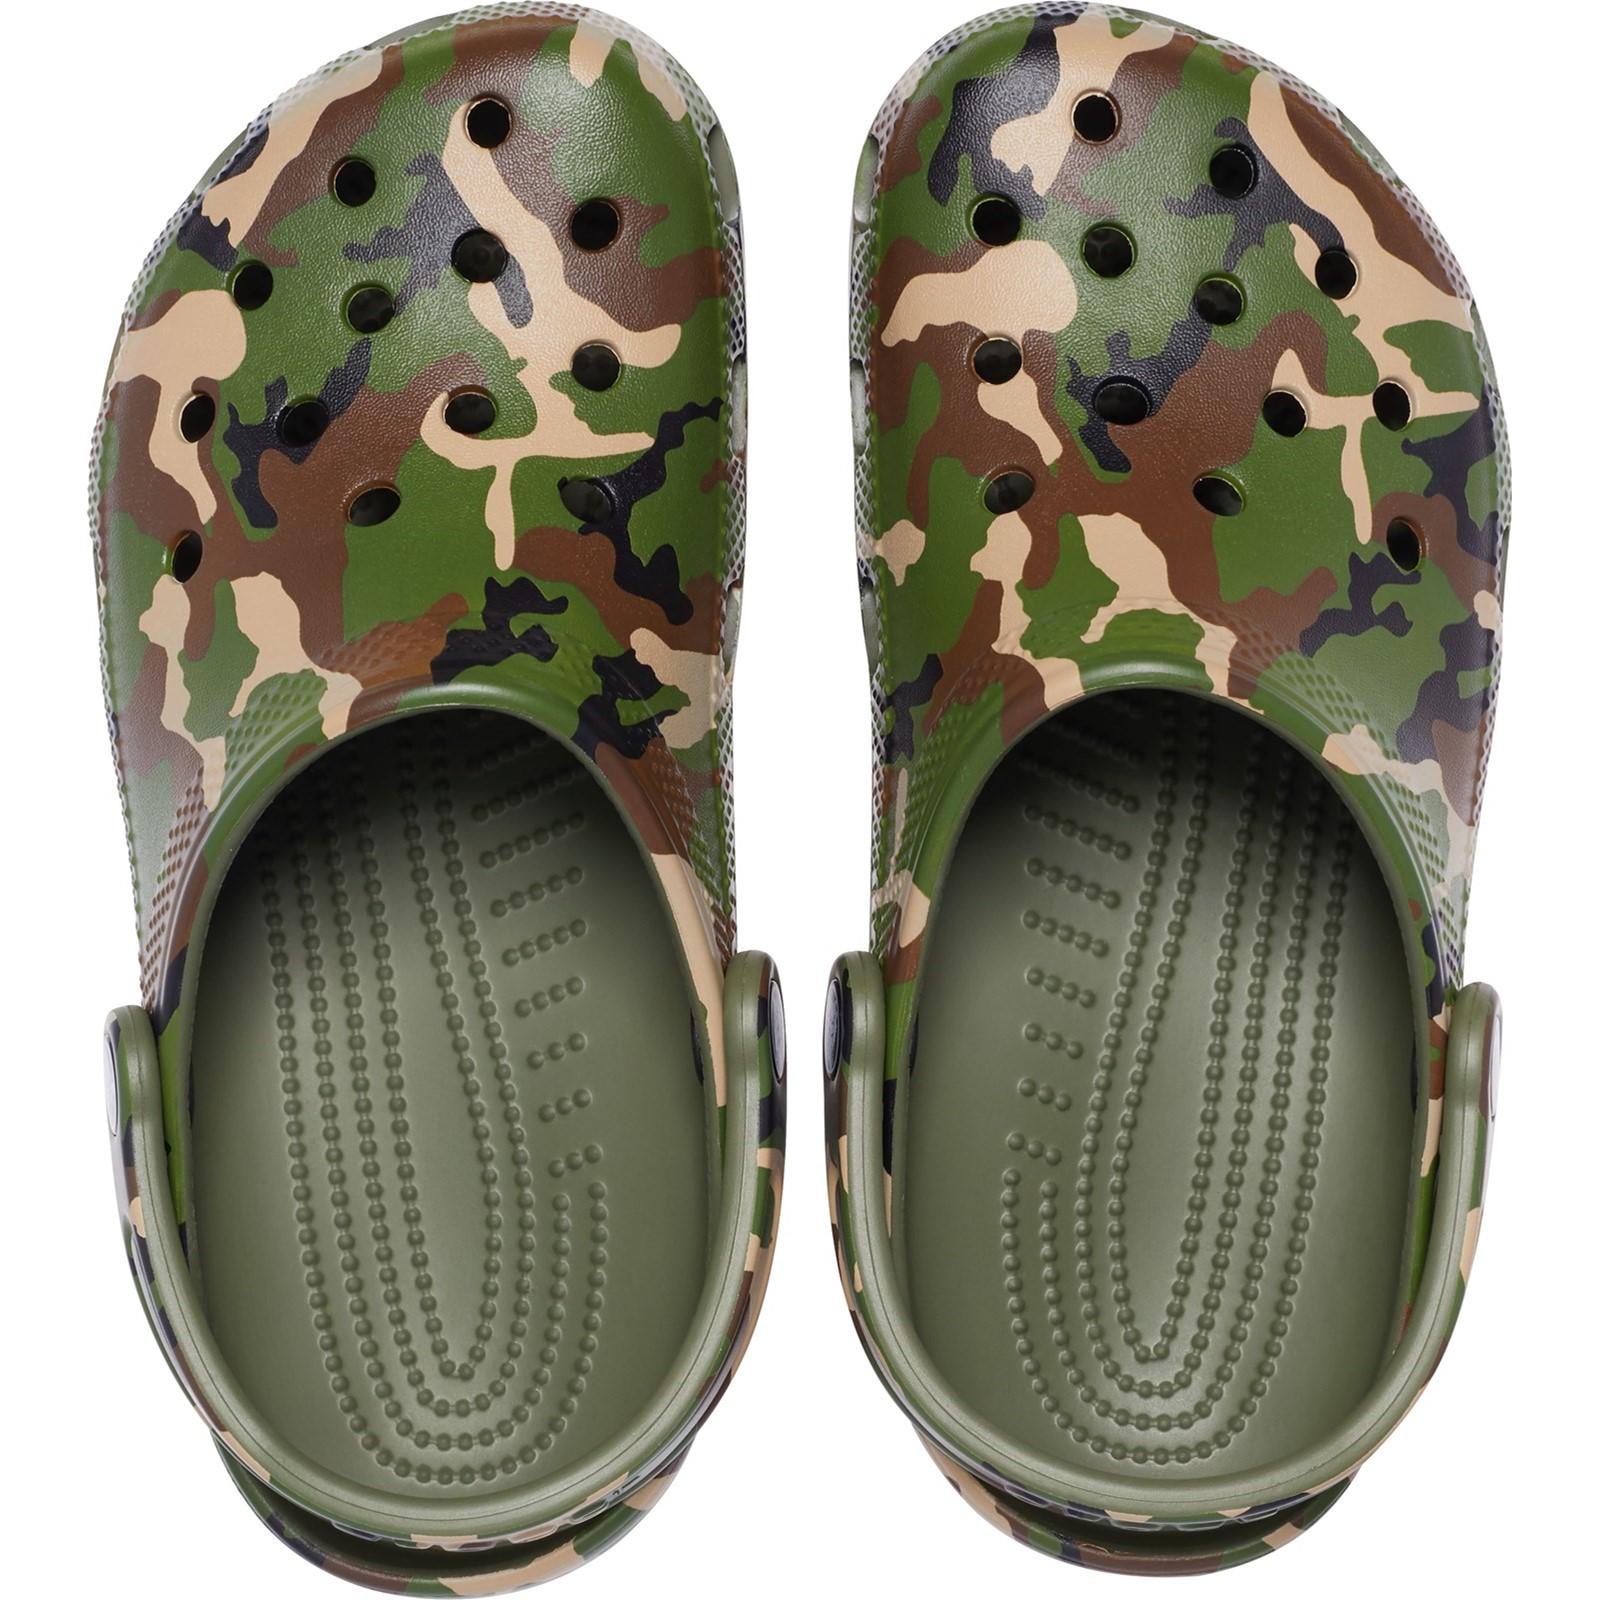 Crocs Seasonal Camo Sandals